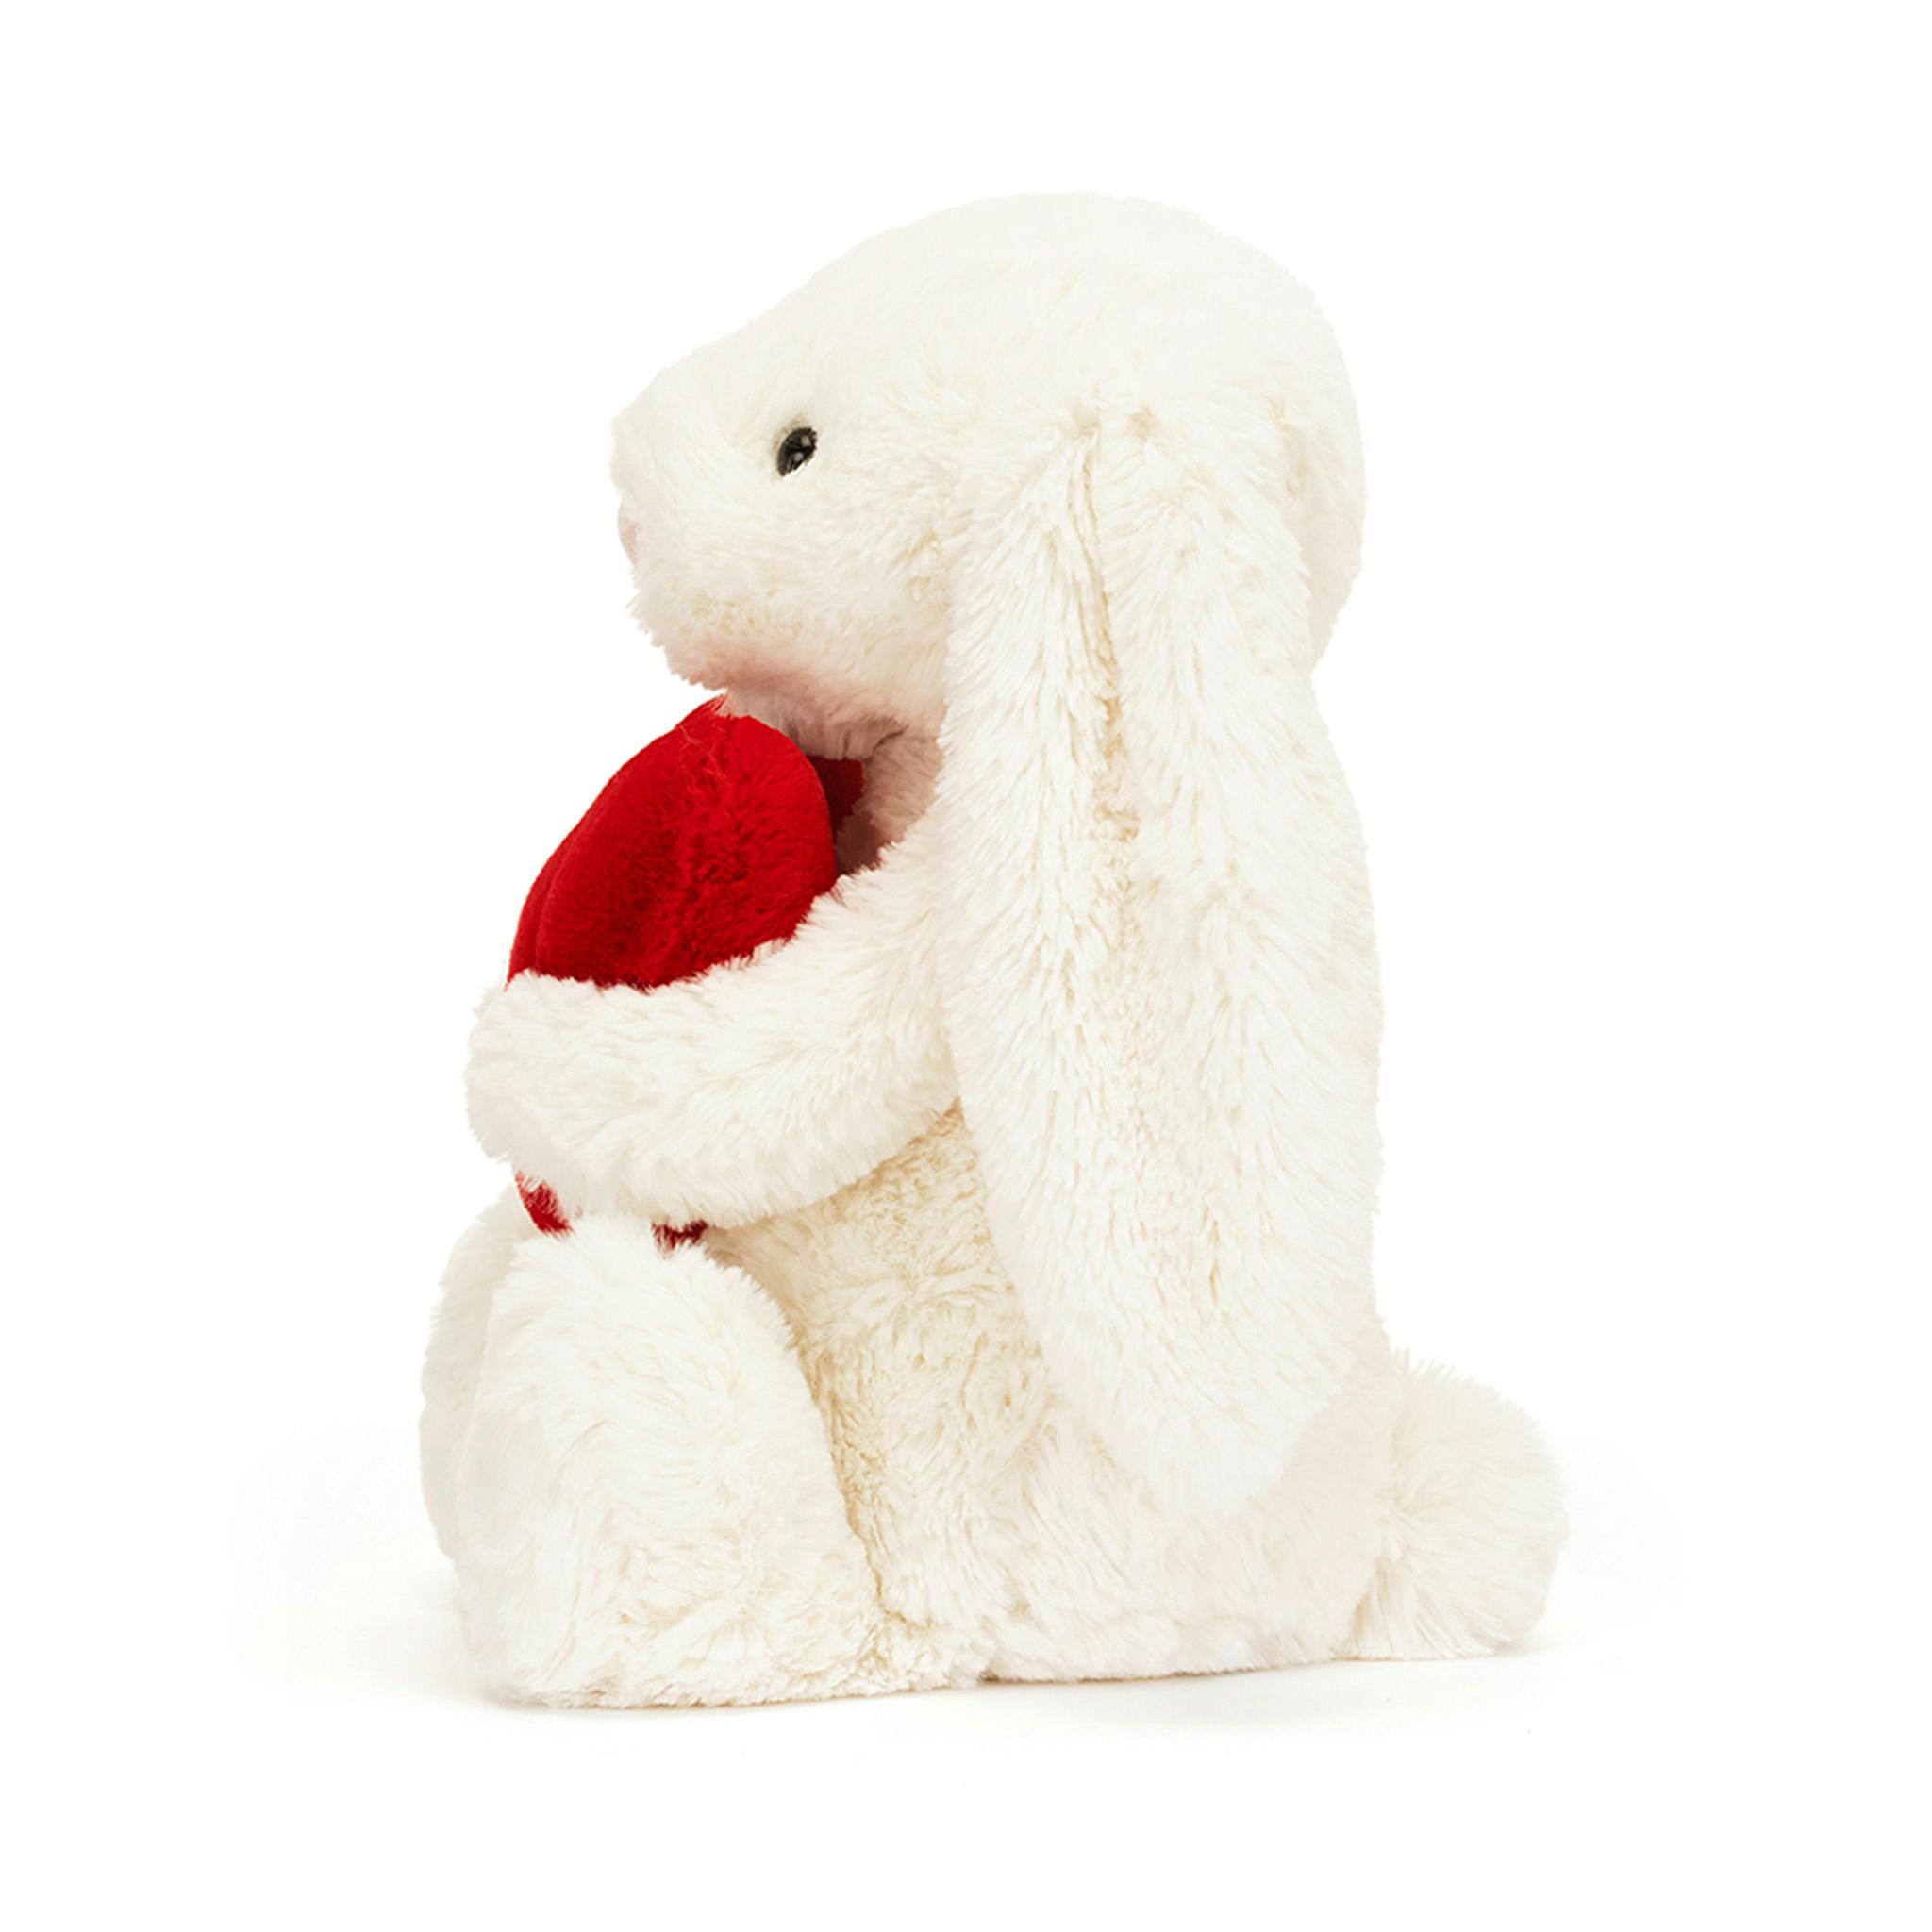 Kanin - Bashful Red Love Heart Bunny Original Medium